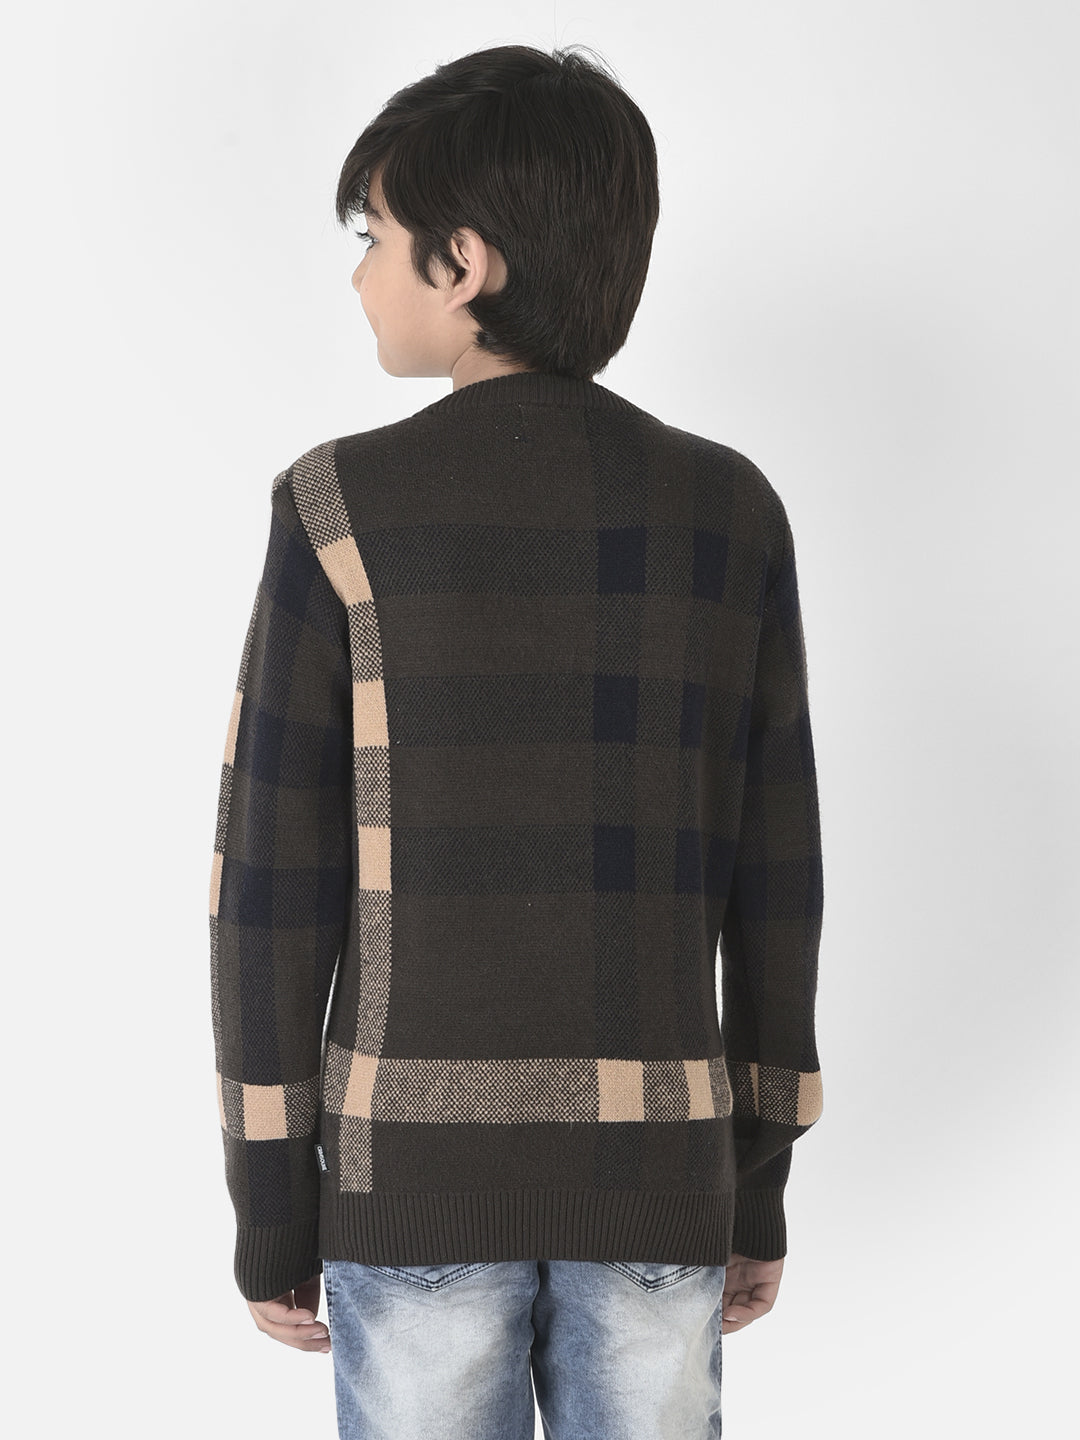  Dual-Tone Checkered Sweater